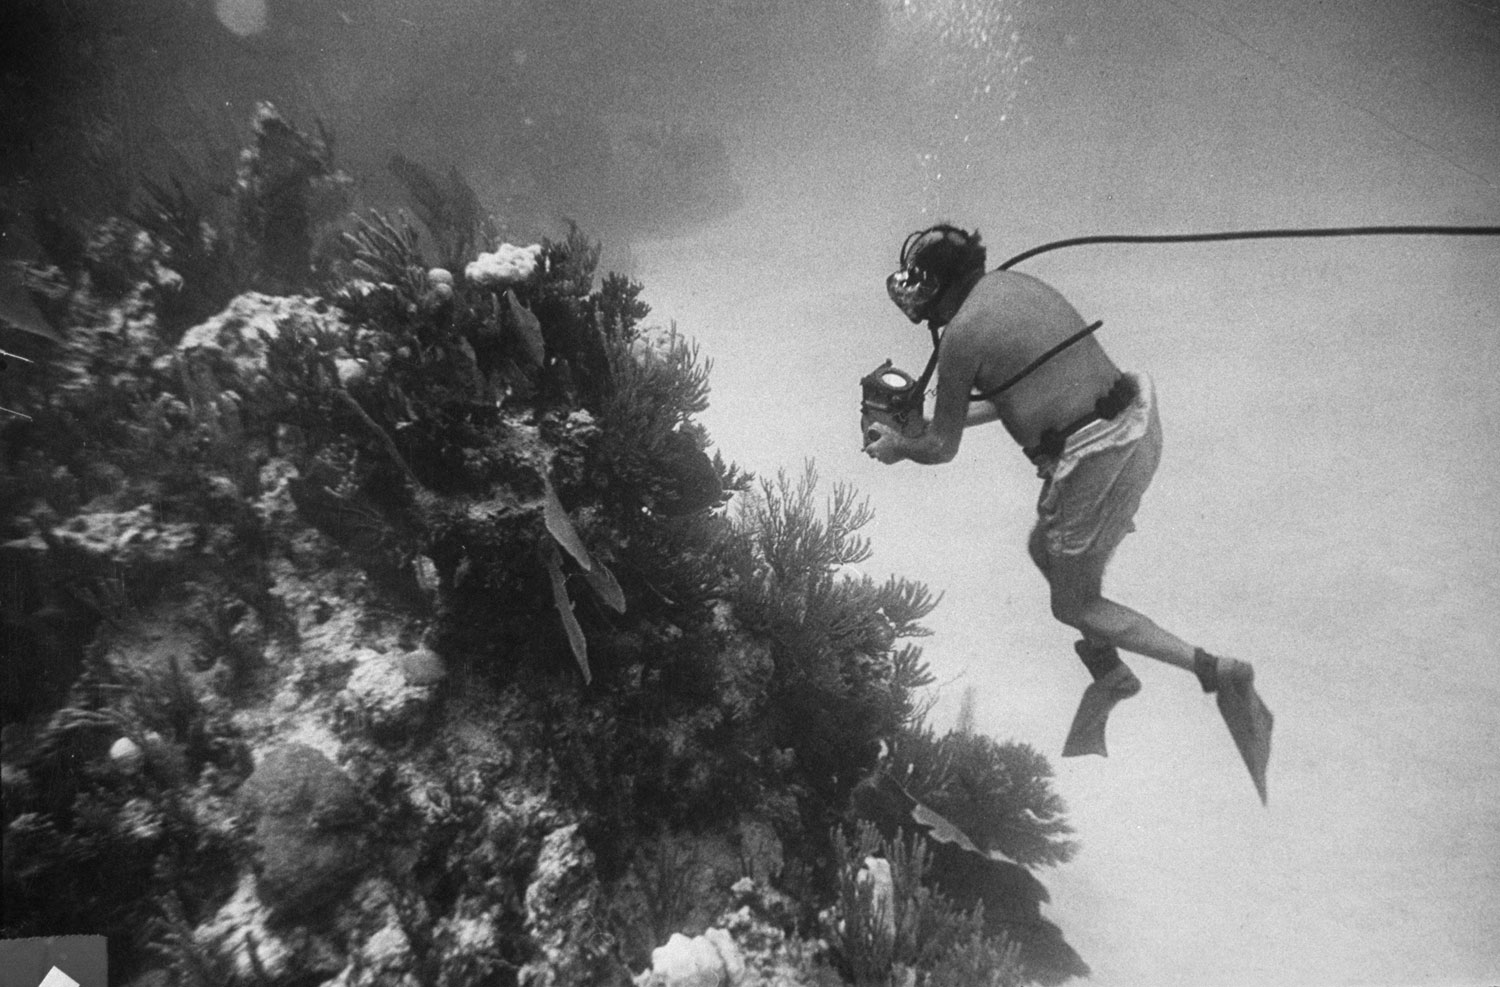 Fritz Goro on assignment off Bikini Atoll, shooting photographs for LIFE magazine, 1953.